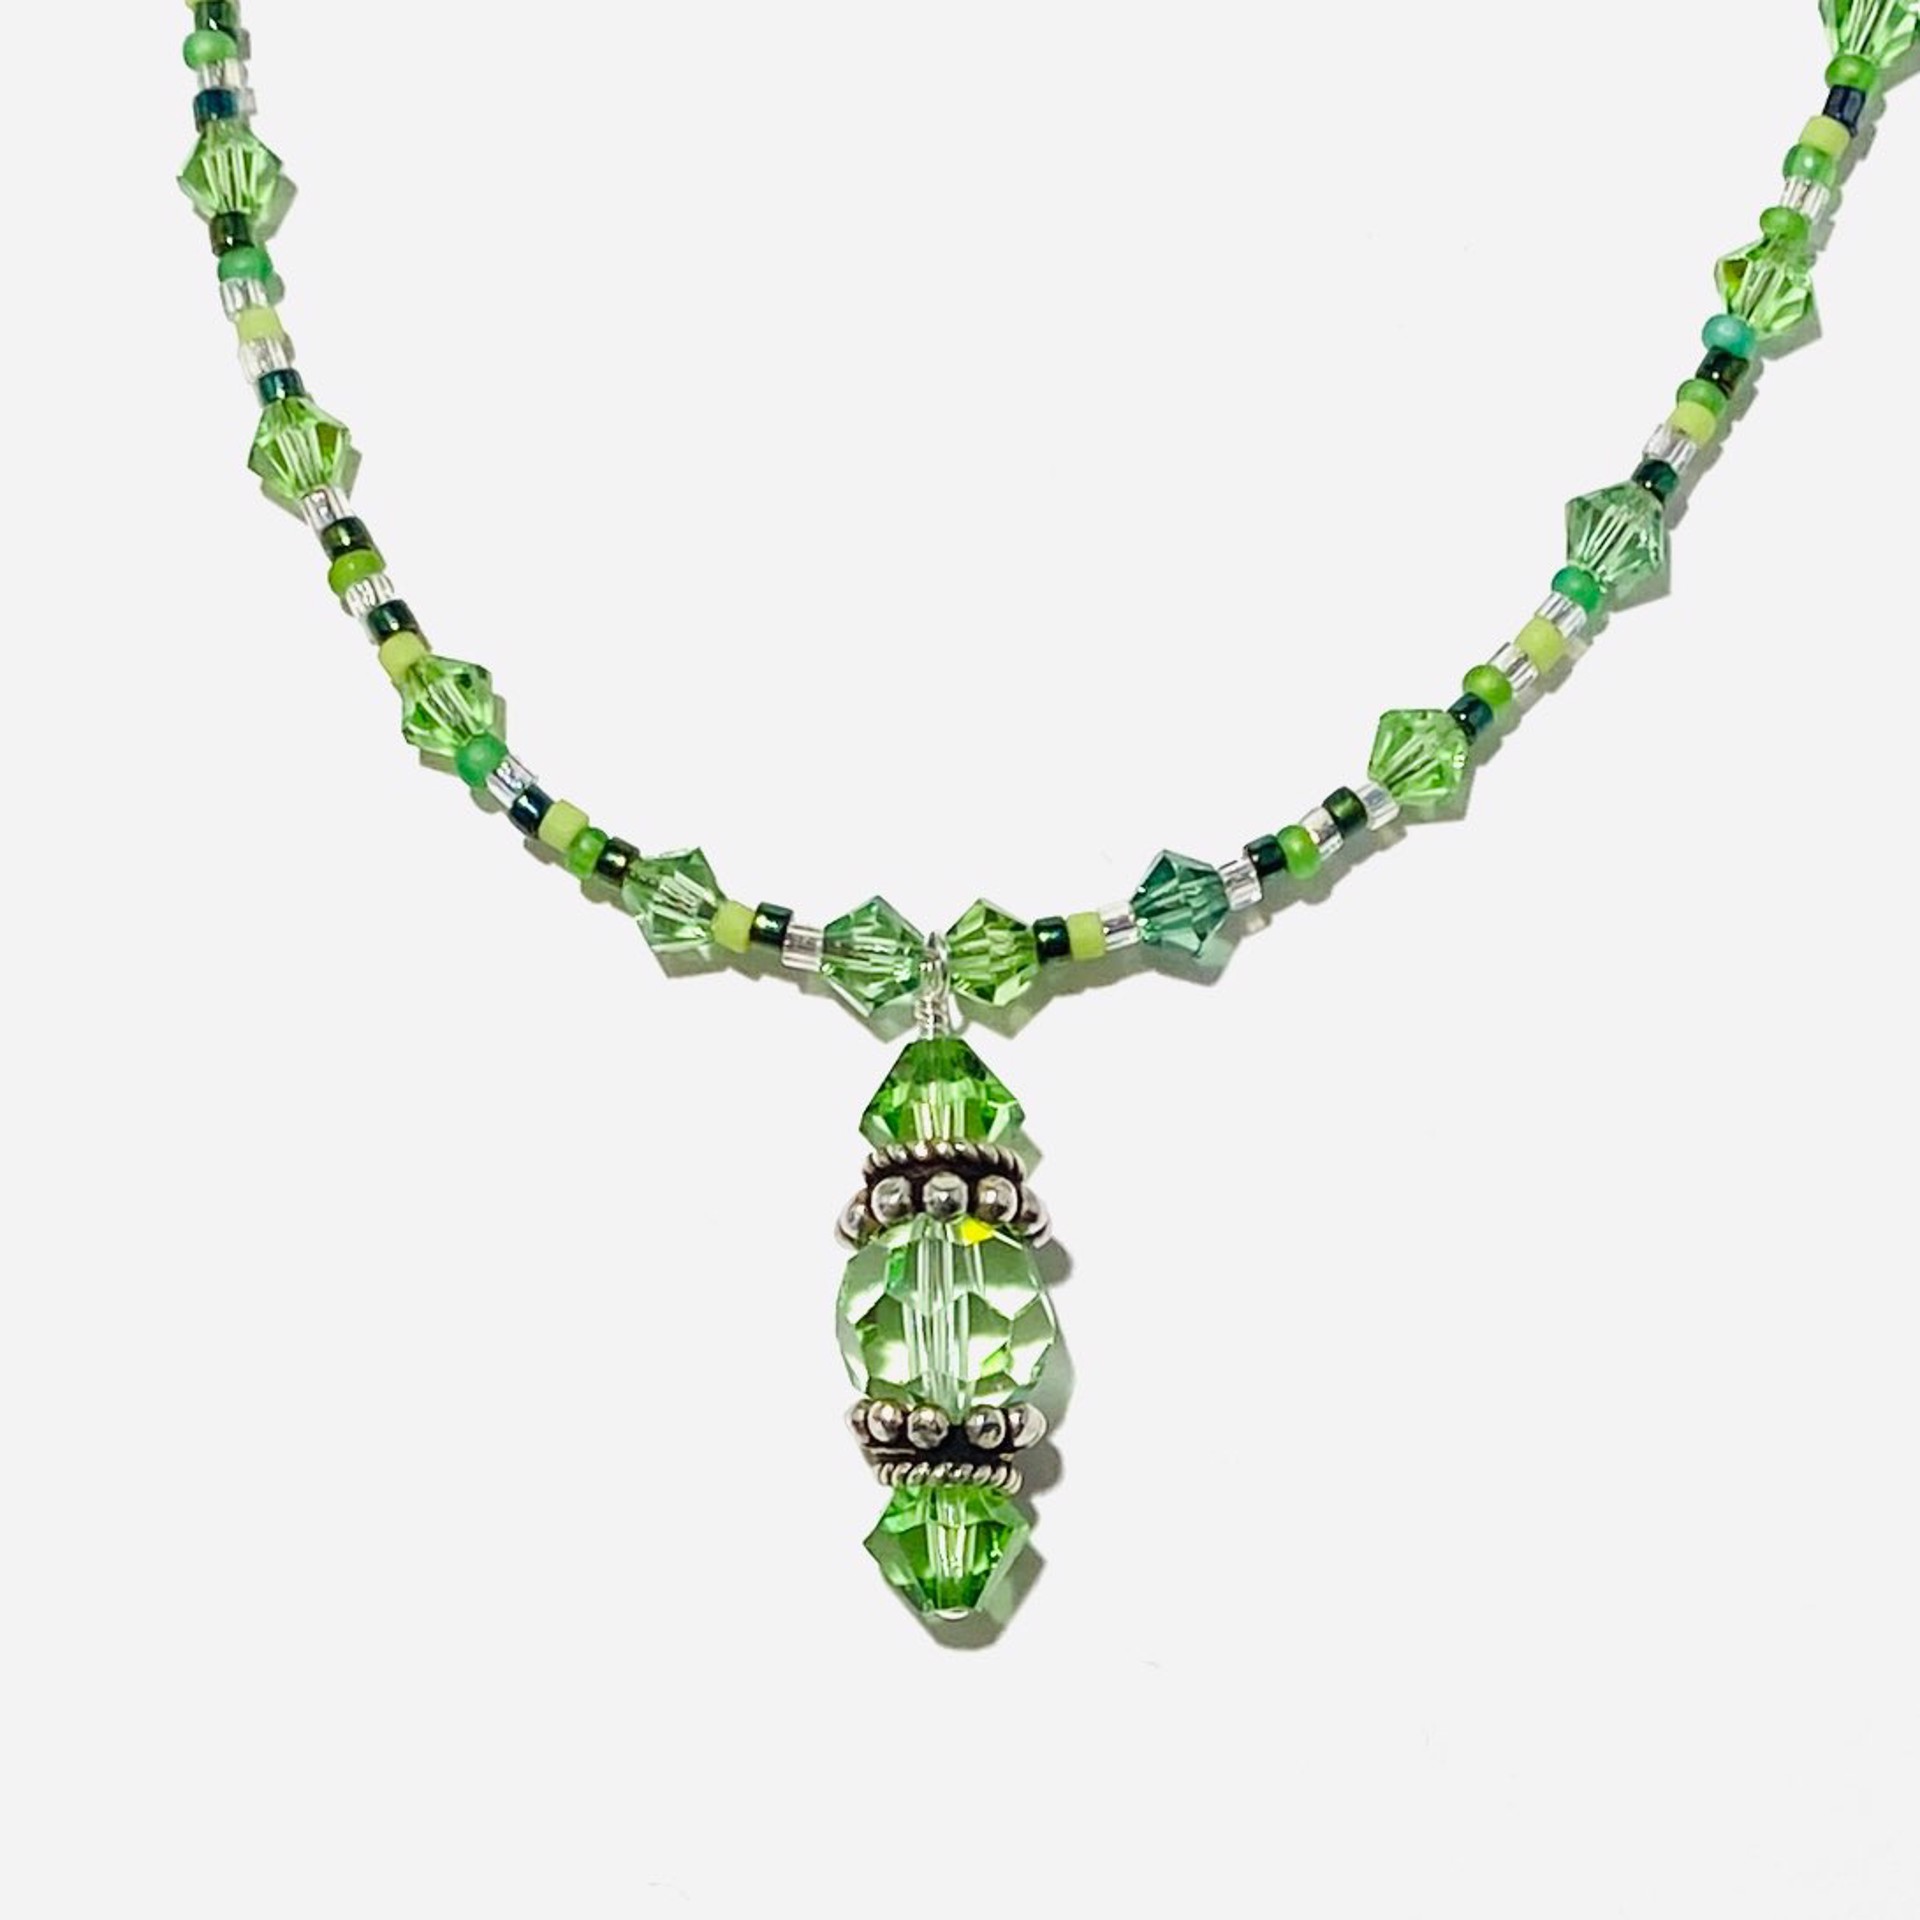 August Birthstone “Peridot” Swarovski Crystal Necklace SHOSH23-1 by Shoshannah Weinisch